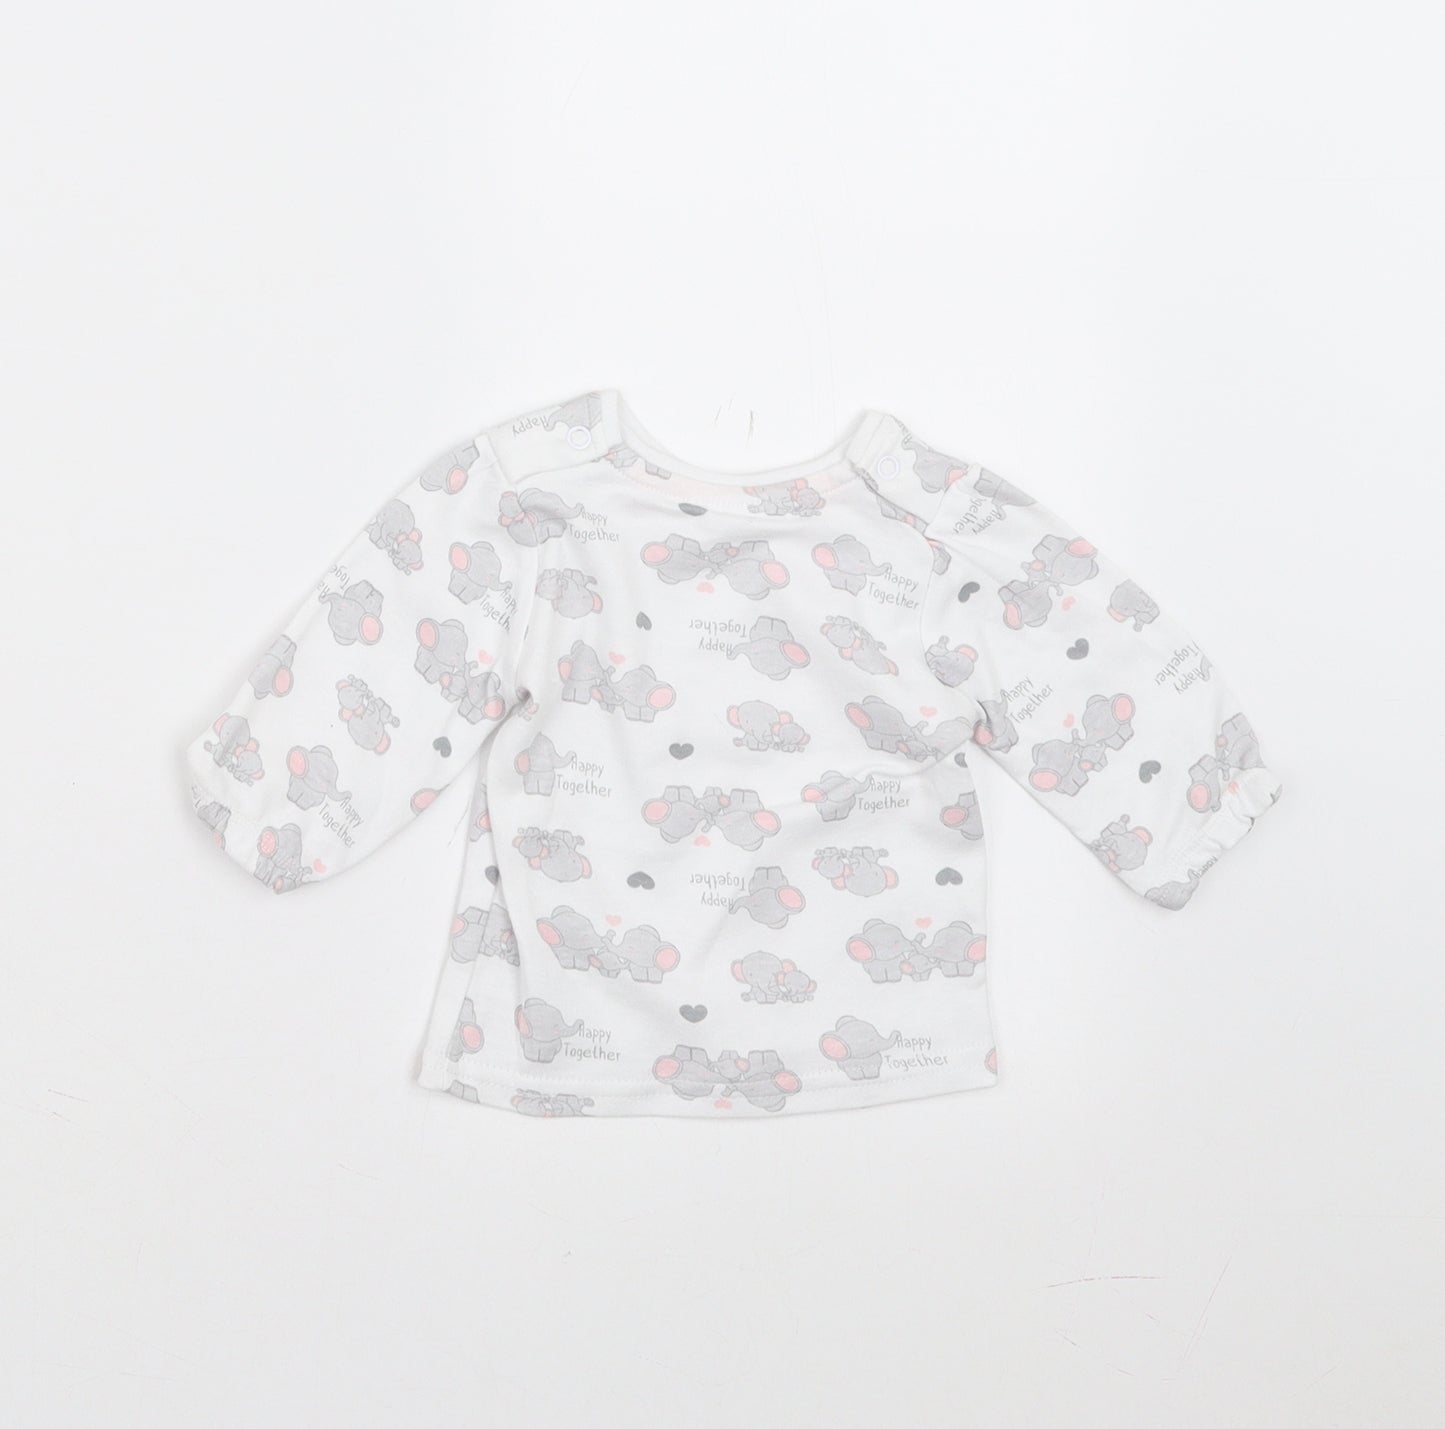 Ergee Girls White   Basic T-Shirt Size 0-3 Months  - Elephant Print